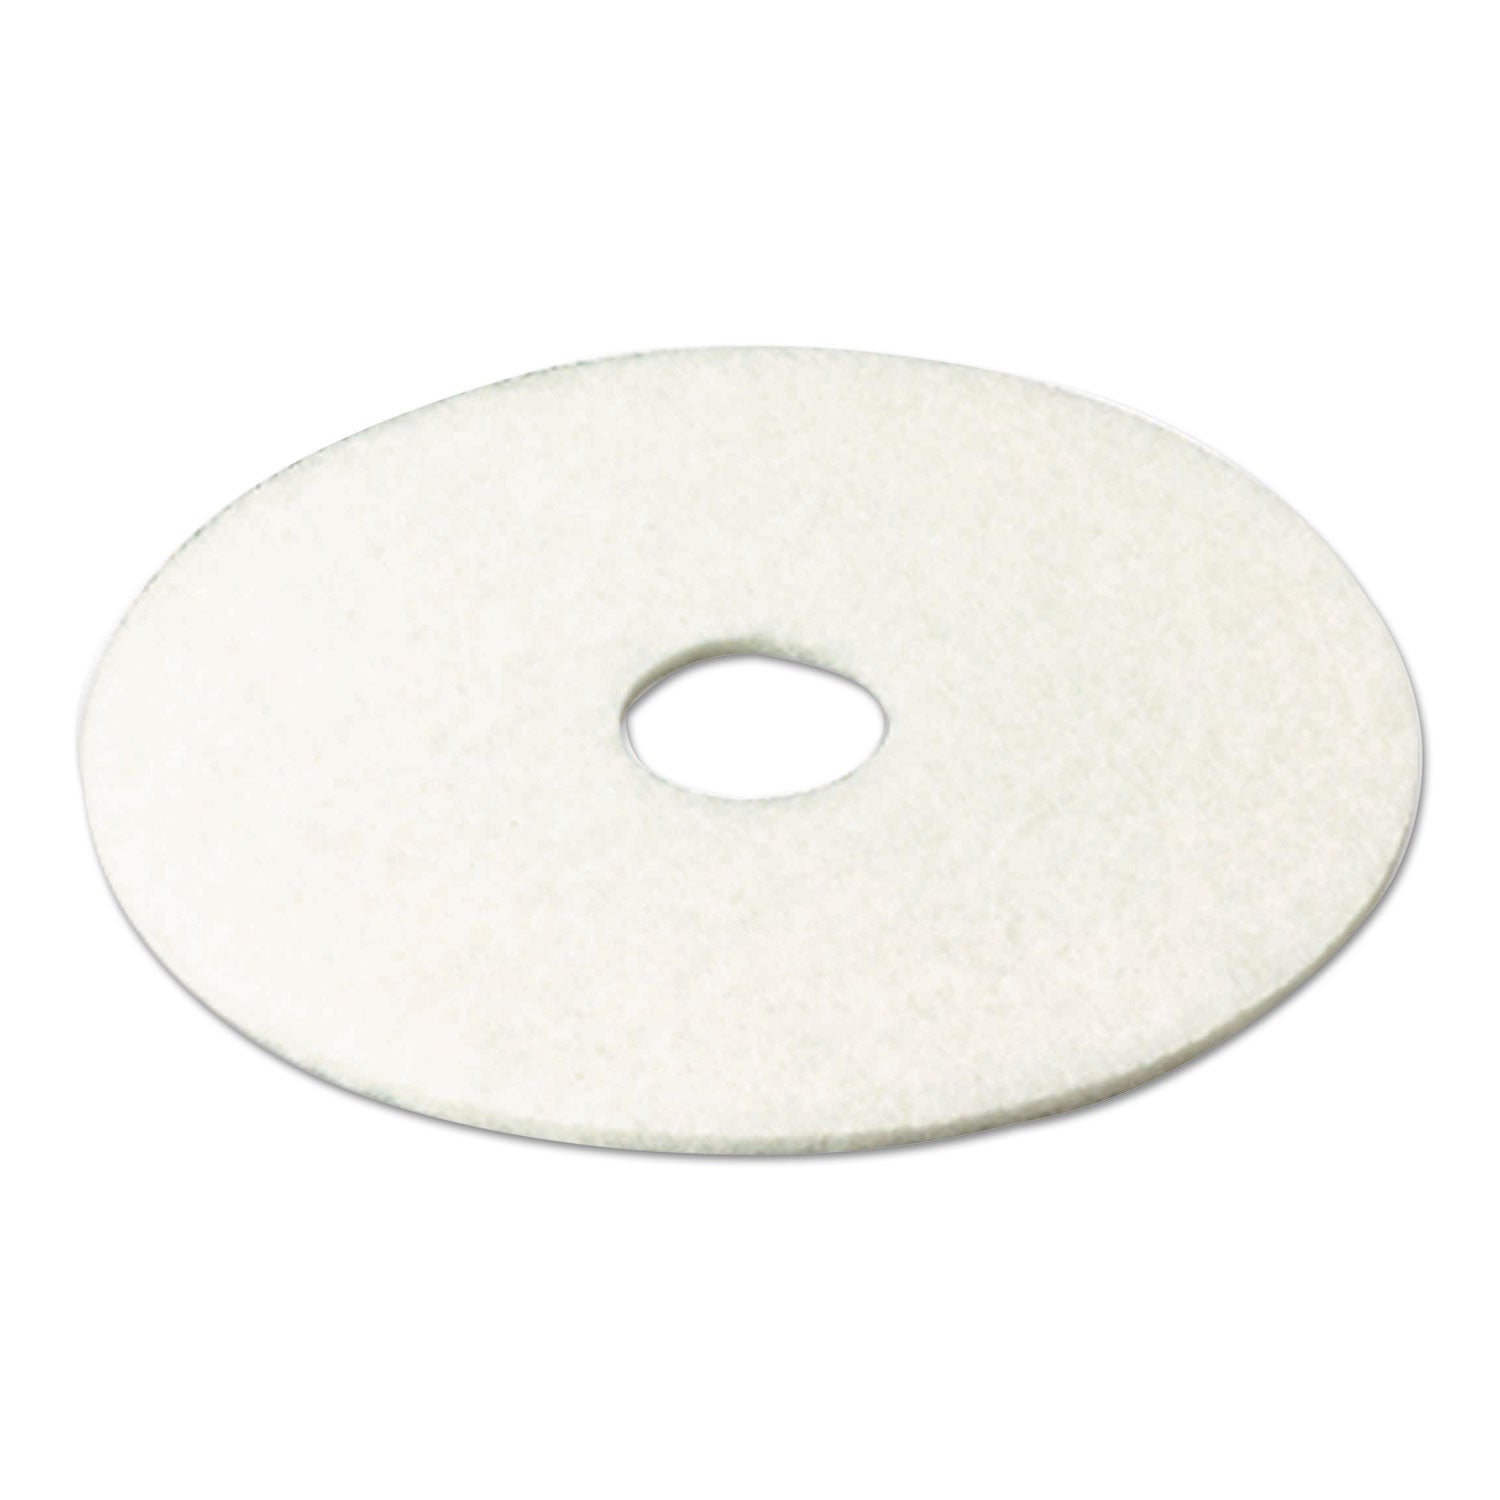 Low-Speed Super Polishing Floor Pads 4100, 19" Diameter, White, 5/Carton - 